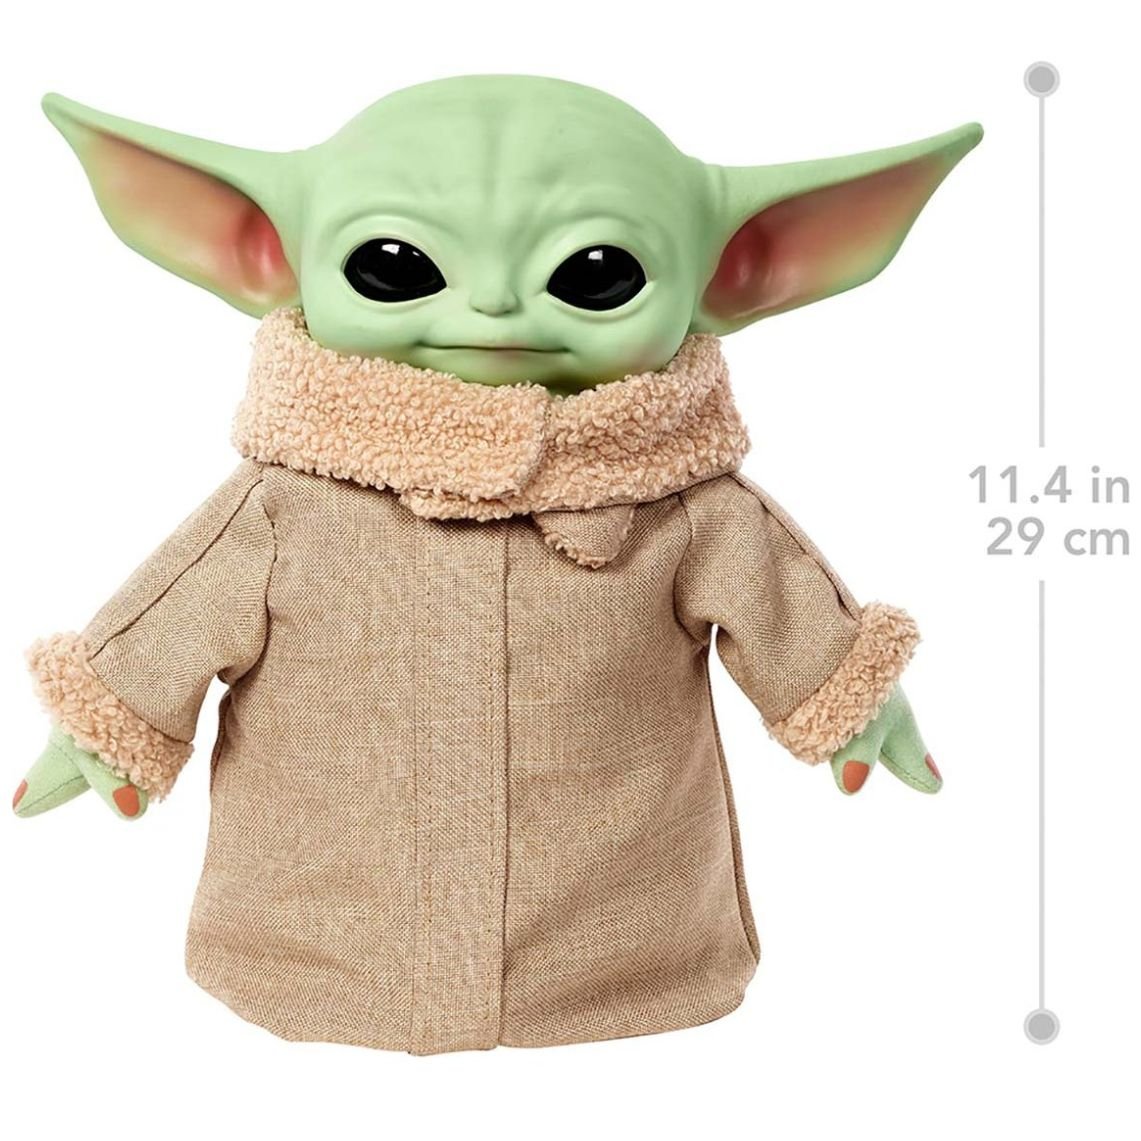 Mattel Star Wars - Juguete de peluche, figura de bebé Yoda de 11 pulgadas  de The Mandalorian, personaje de peluche coleccionable con bolsa de